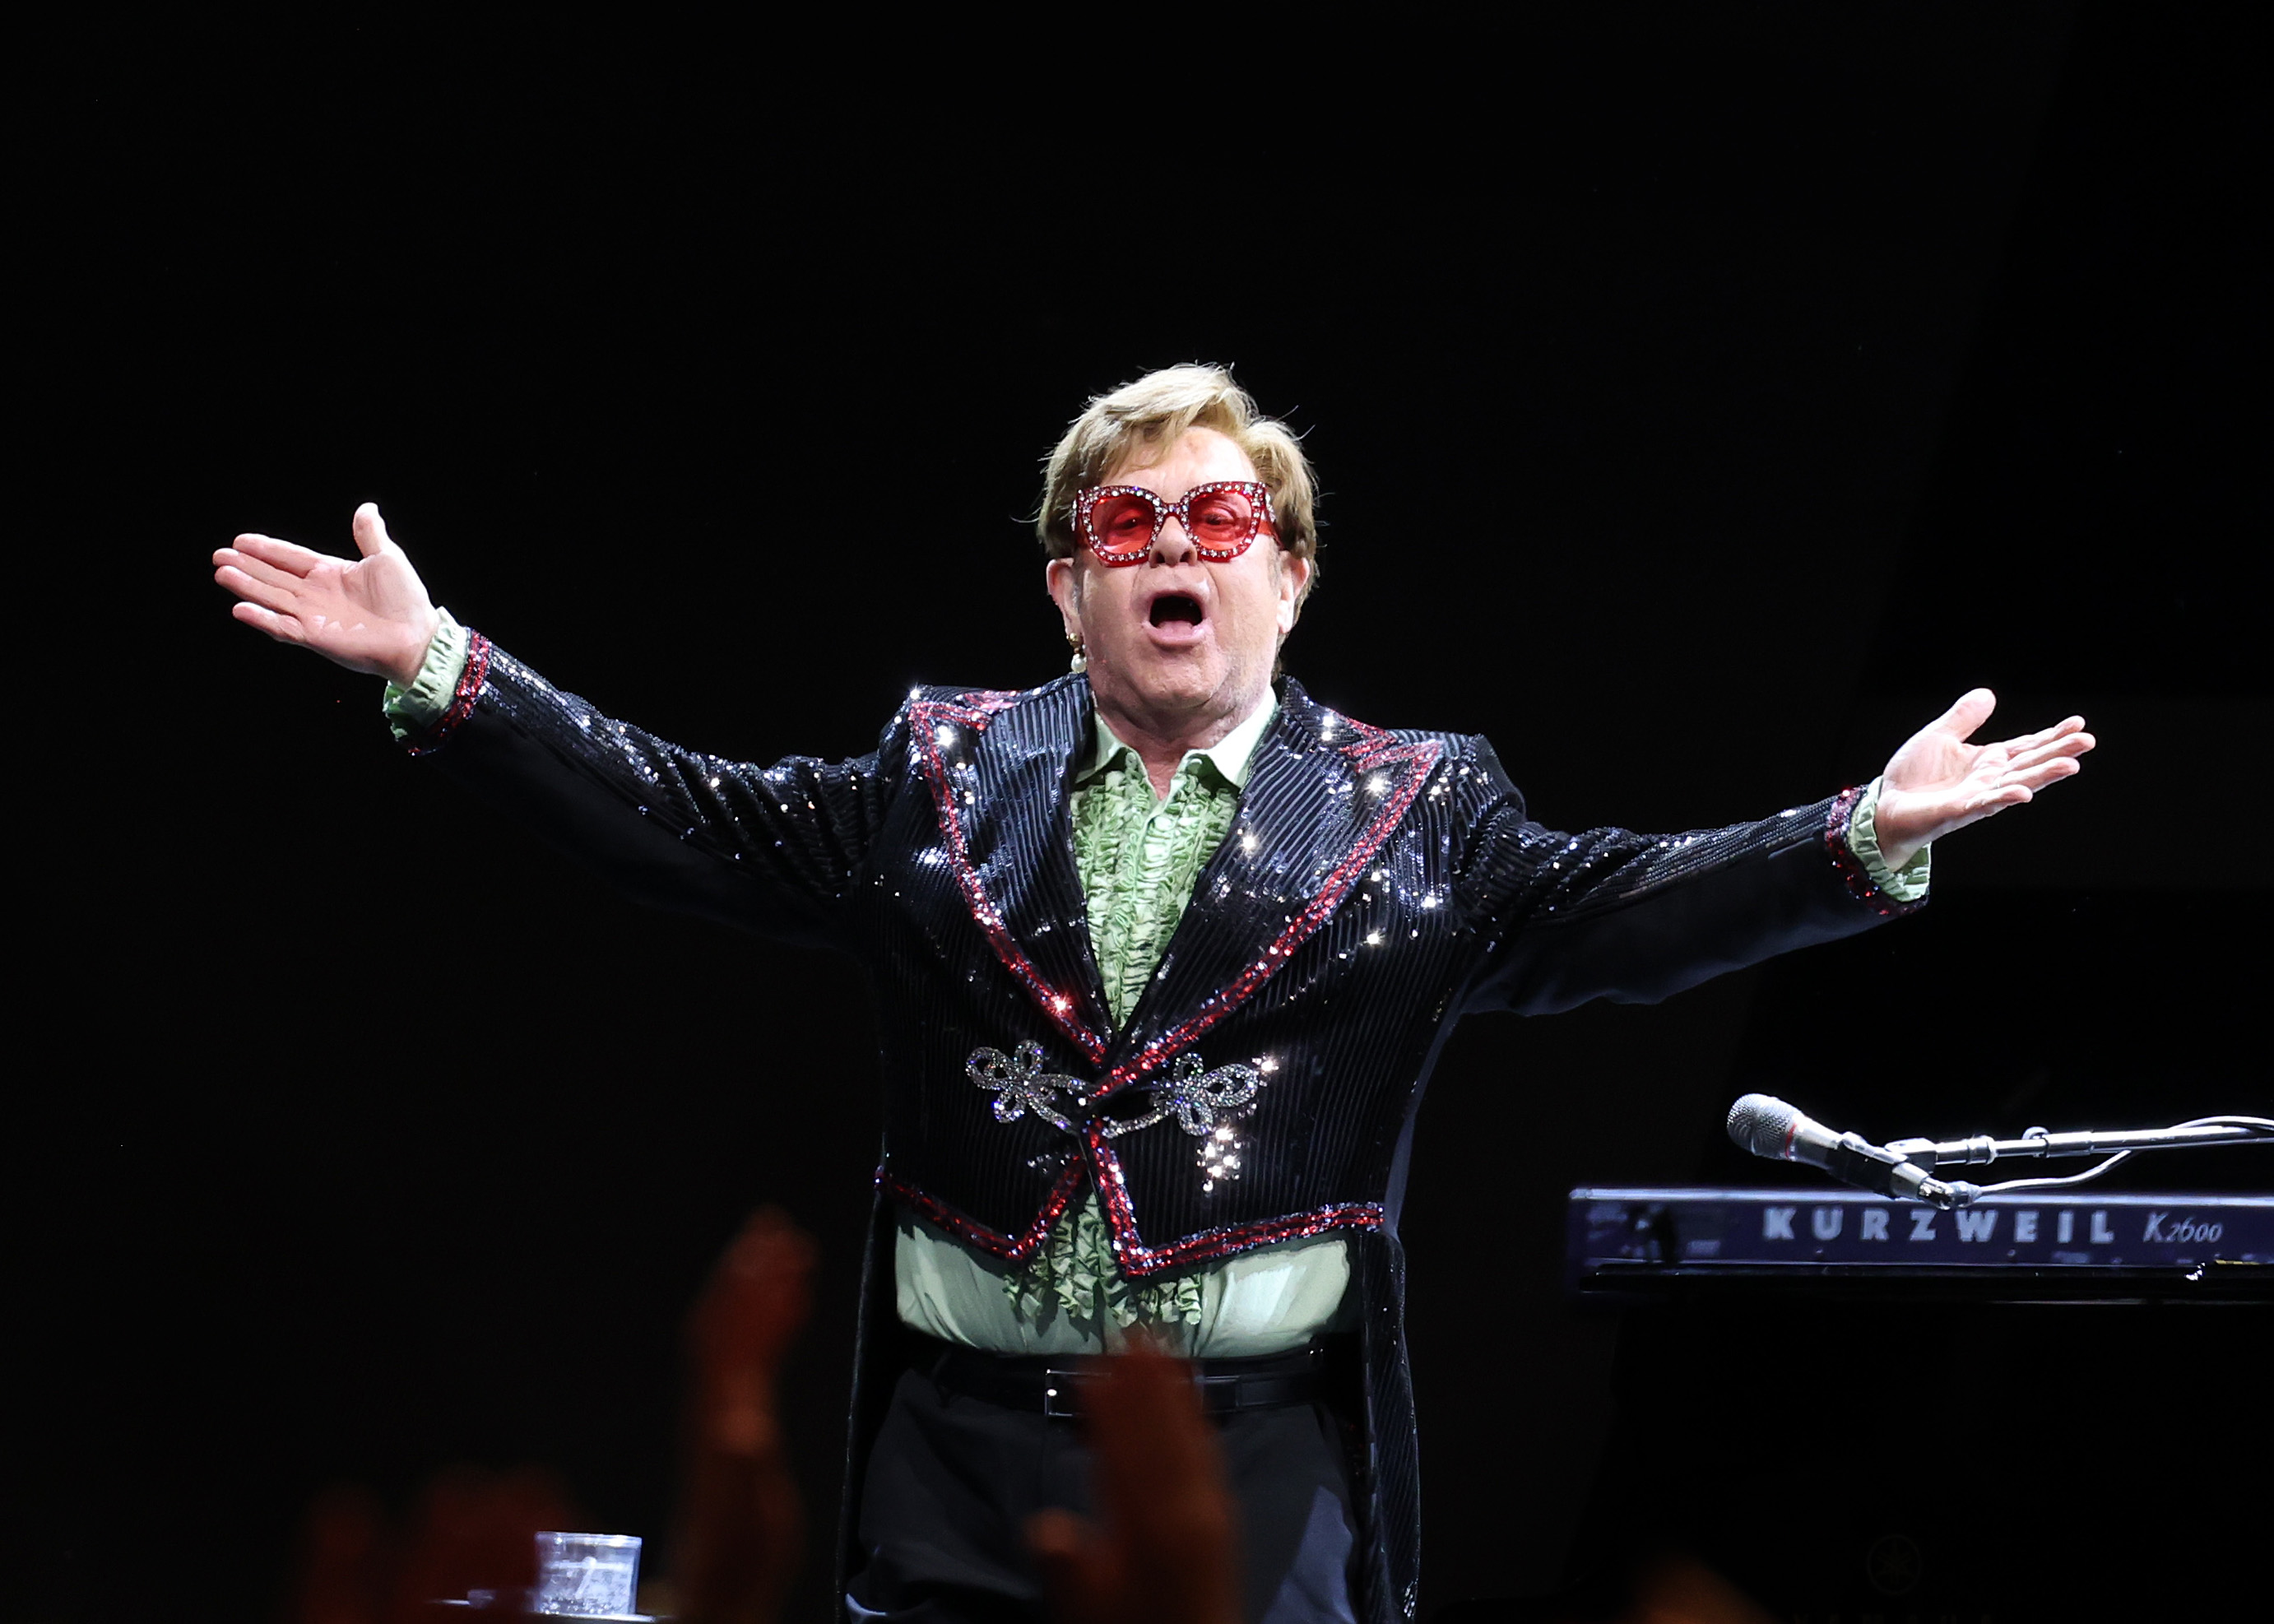 Sir Elton John Performs live on stage during his Farewell Yellow Brick Road Tour